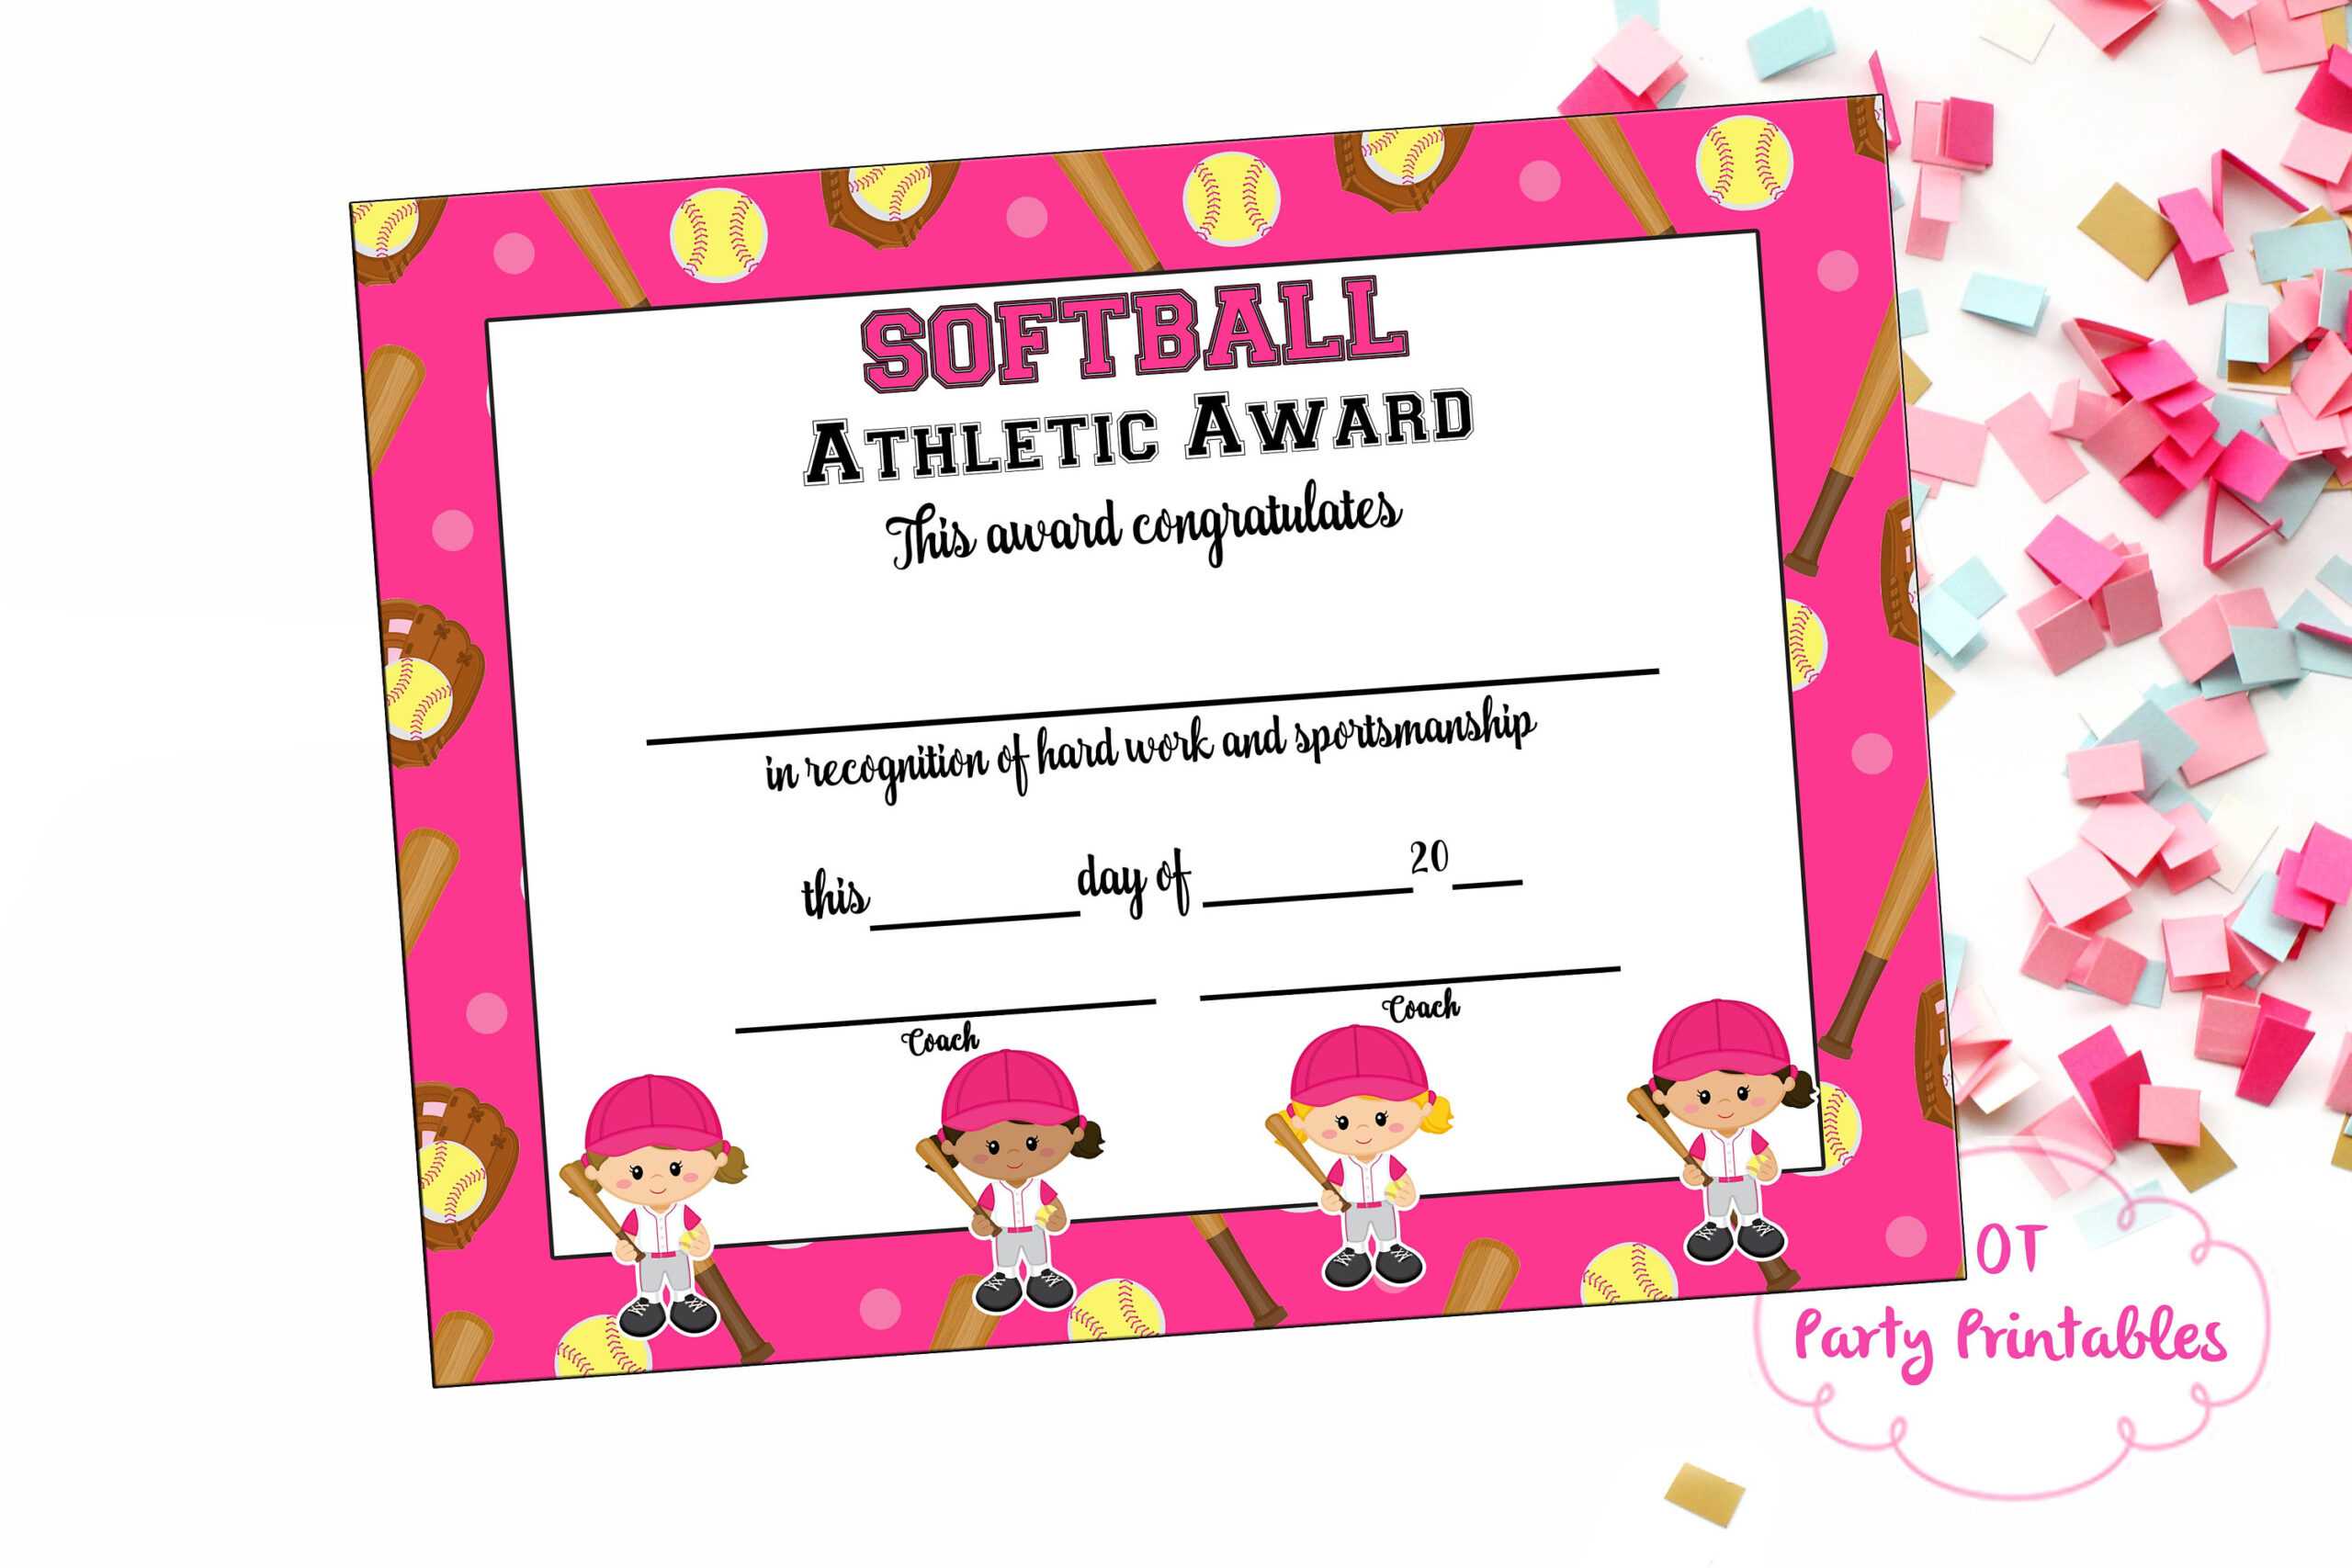 Softball Certificate Of Achievement – Softball Award – Print At Home –  Softball Mvp – Softball Certificate Of Completion – Sports Award For Softball Certificate Templates